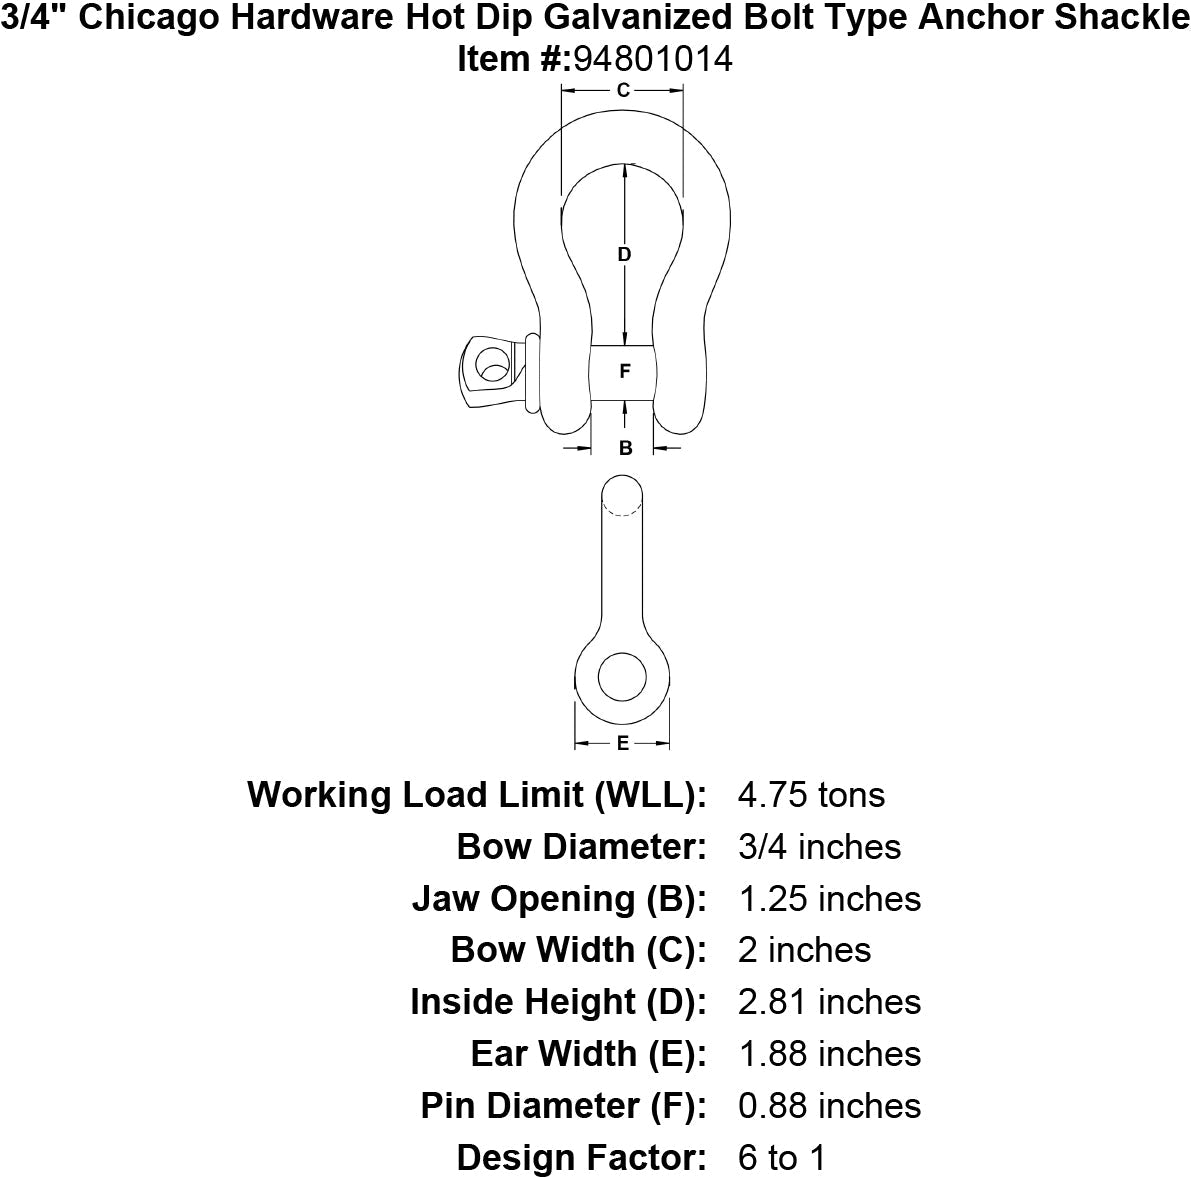 Chicago Hardware Hot Dip Galvanized Bolt Type Anchor Shackles